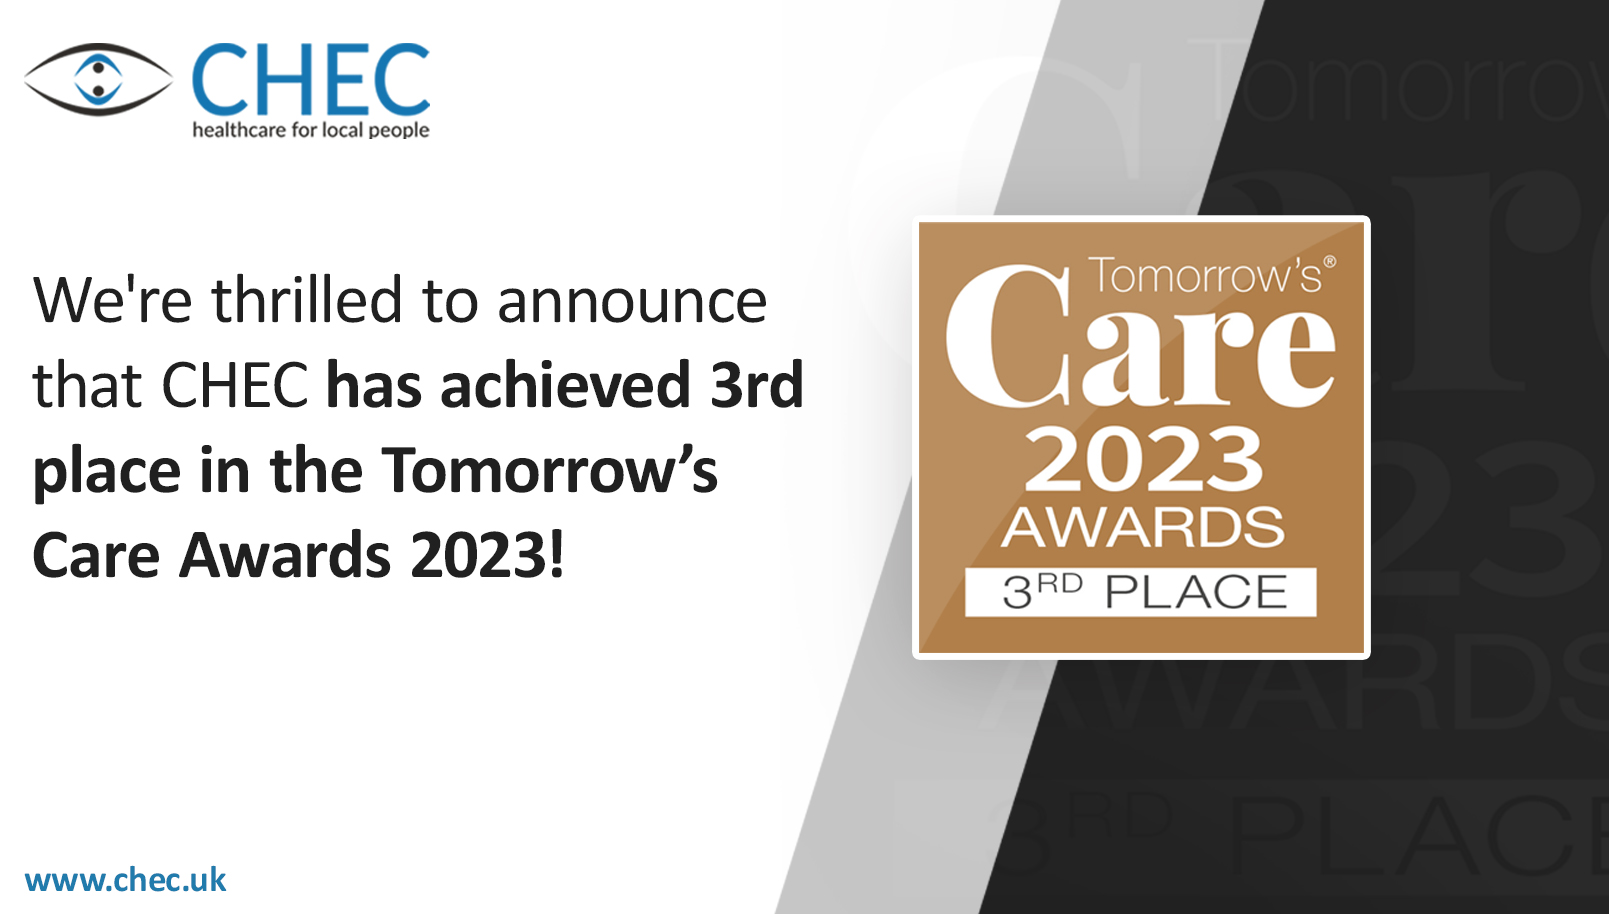 tomorrows care 2023 awards